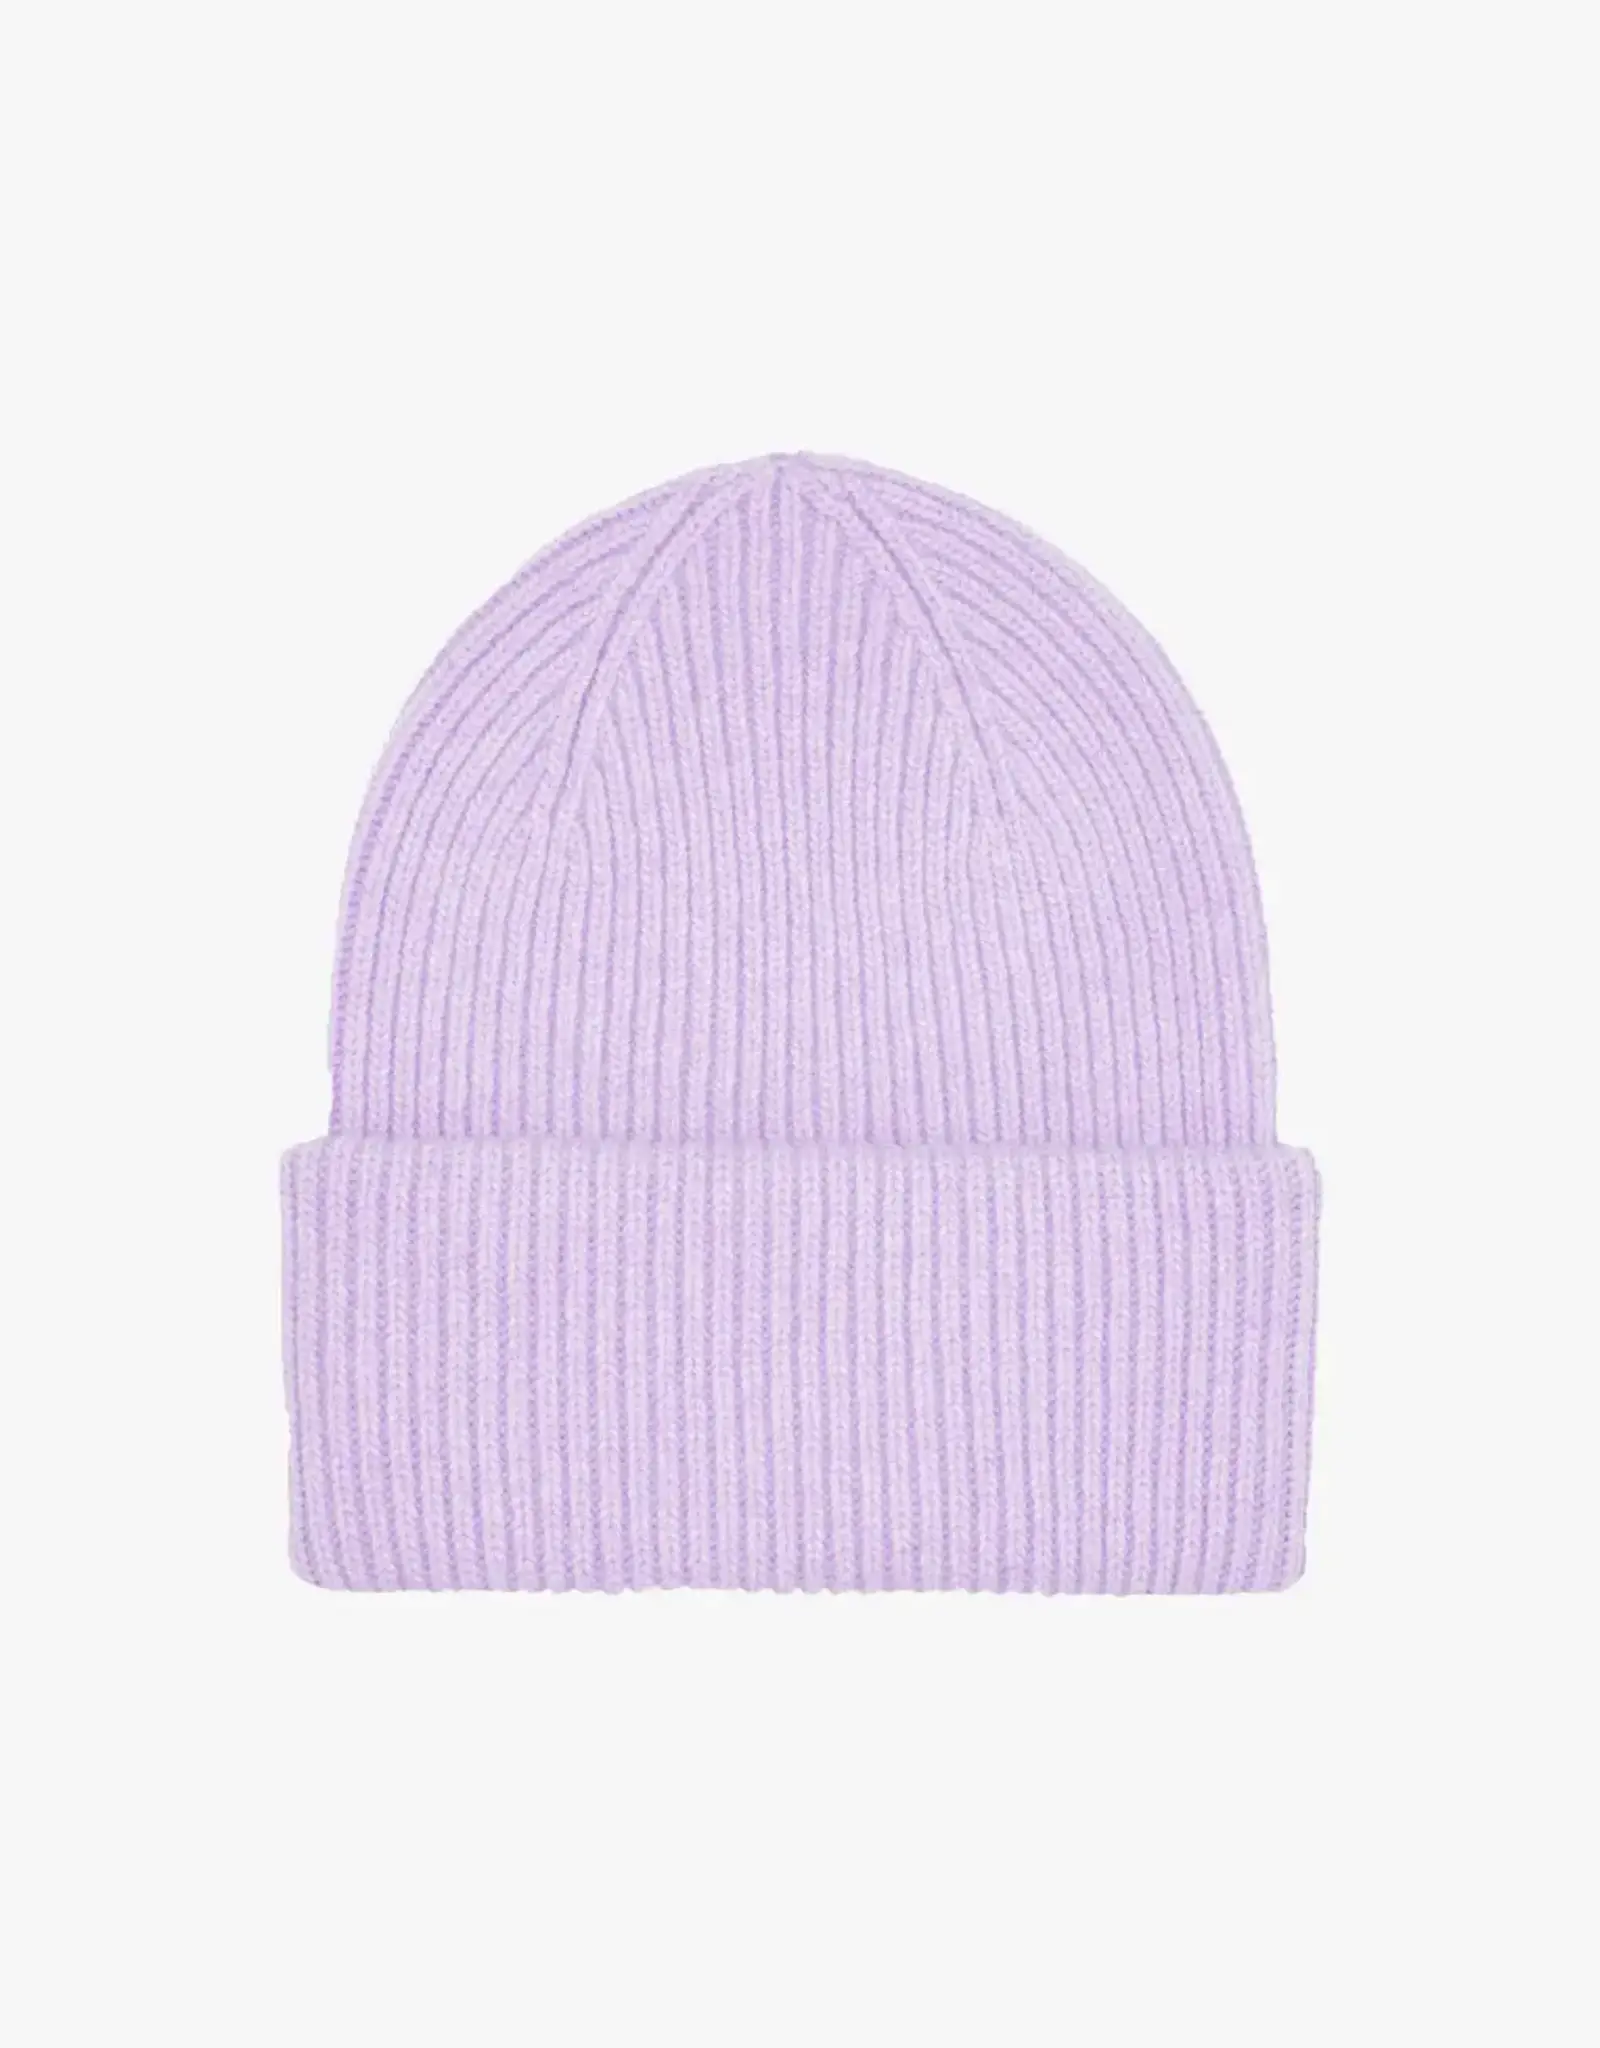 Colorful Standard Hat 'Merino Wool' - Soft Lavender - Colorful Standard